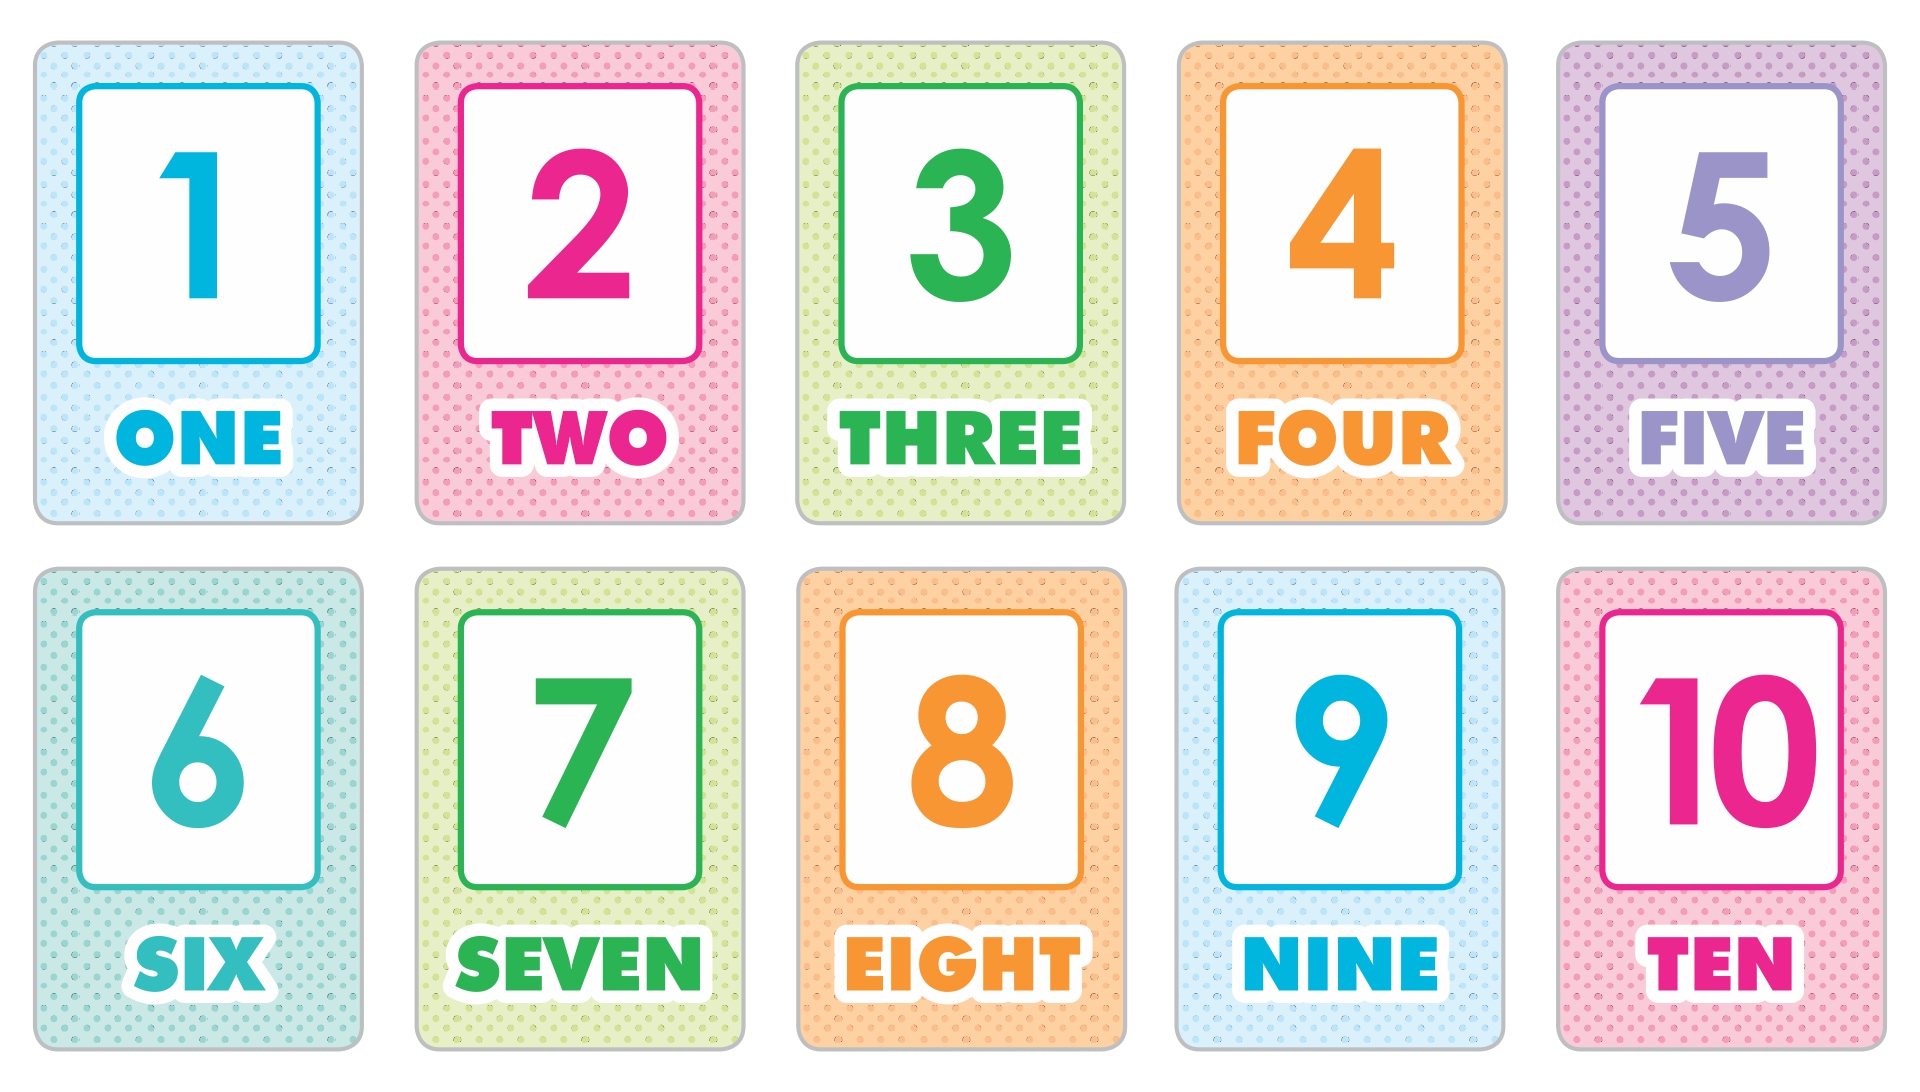 4 Best Large Printable Number Cards 1 20 Printableecom 6 Best Images Of Number Flashcards 1 30 